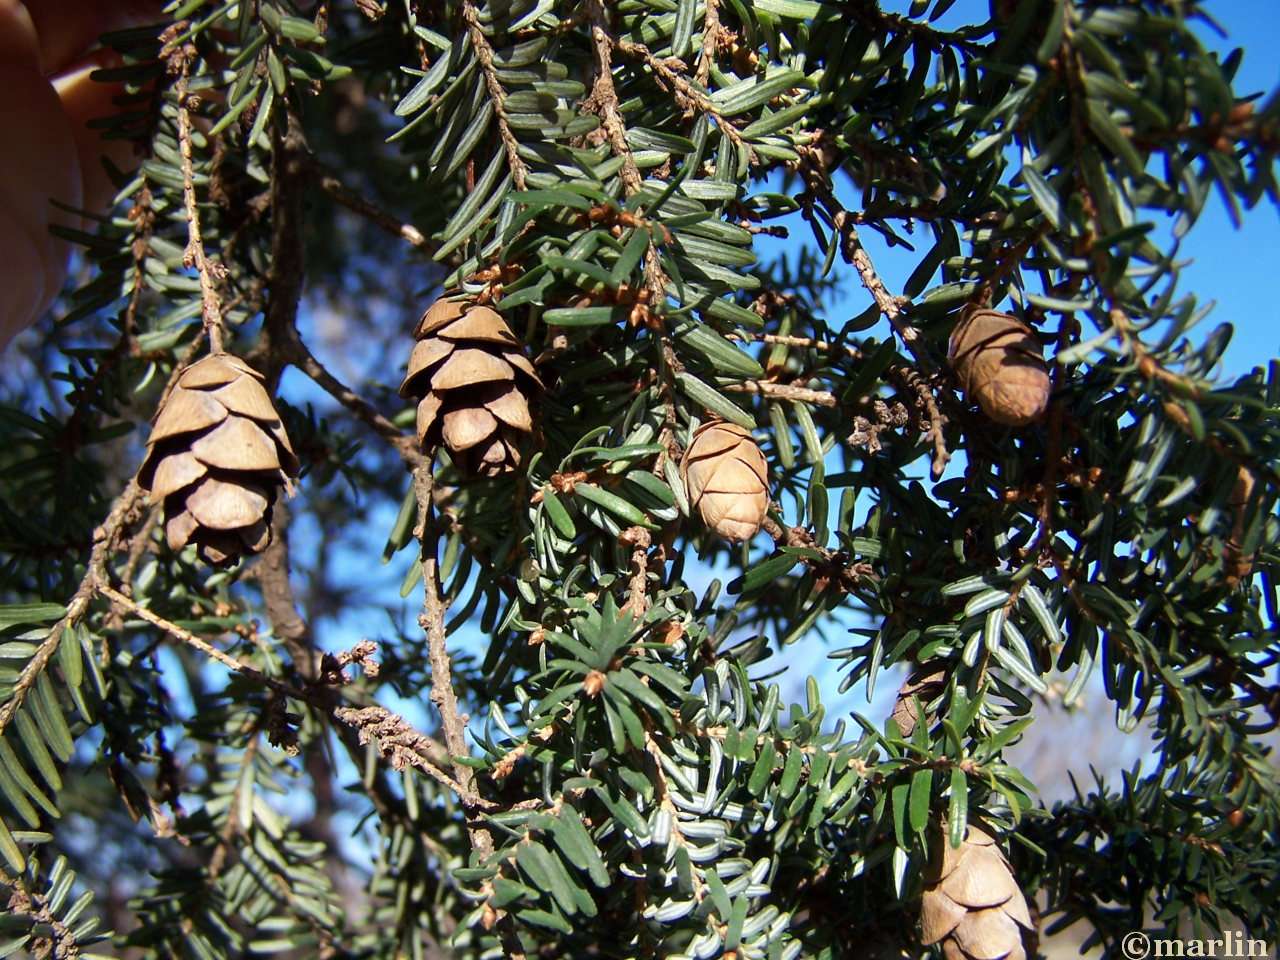 Eastern Hemlock cones